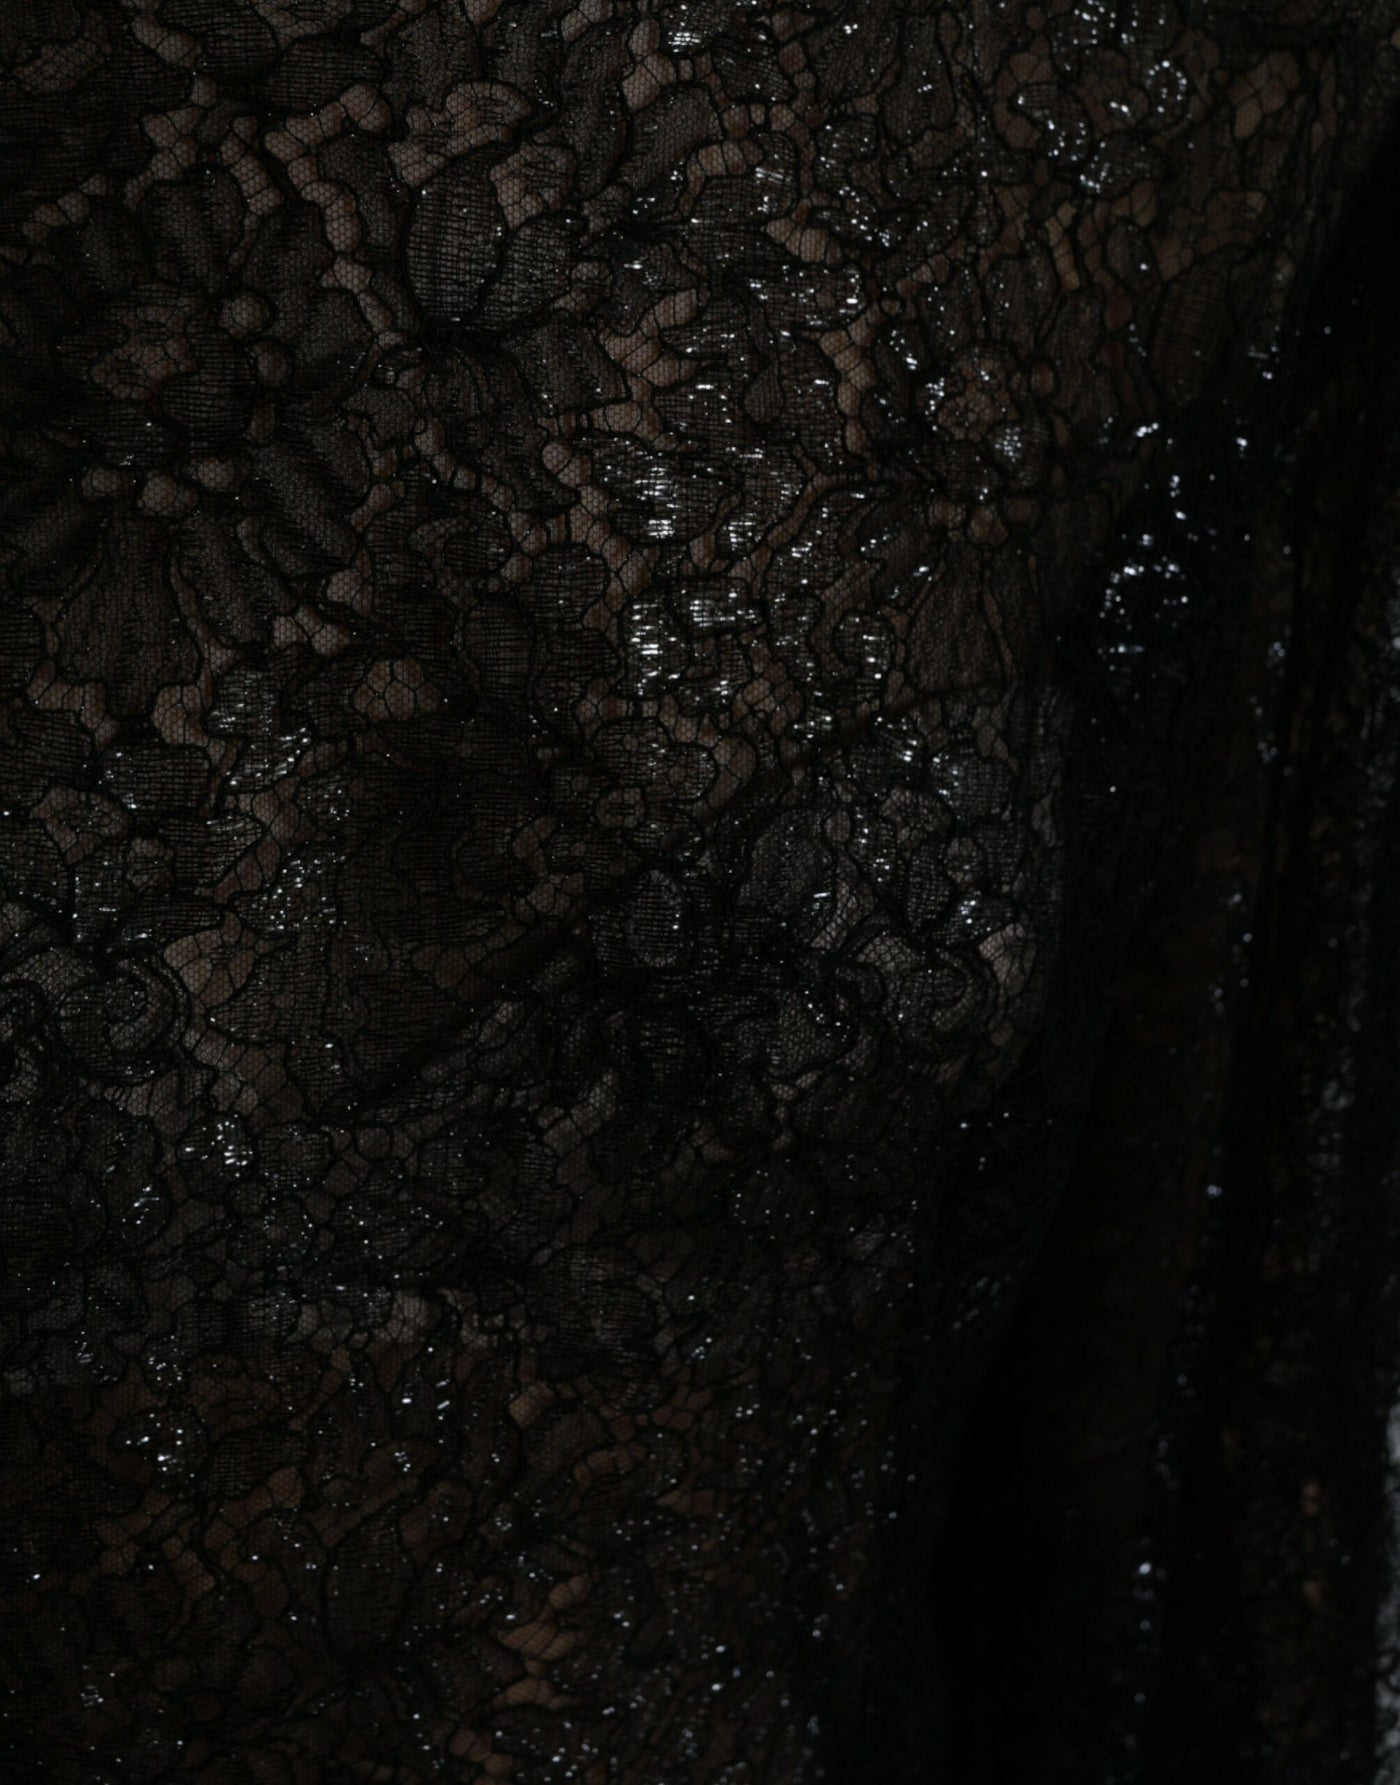 Dolce & Gabbana Black Floral Lace Sheer A-line Midi Dress